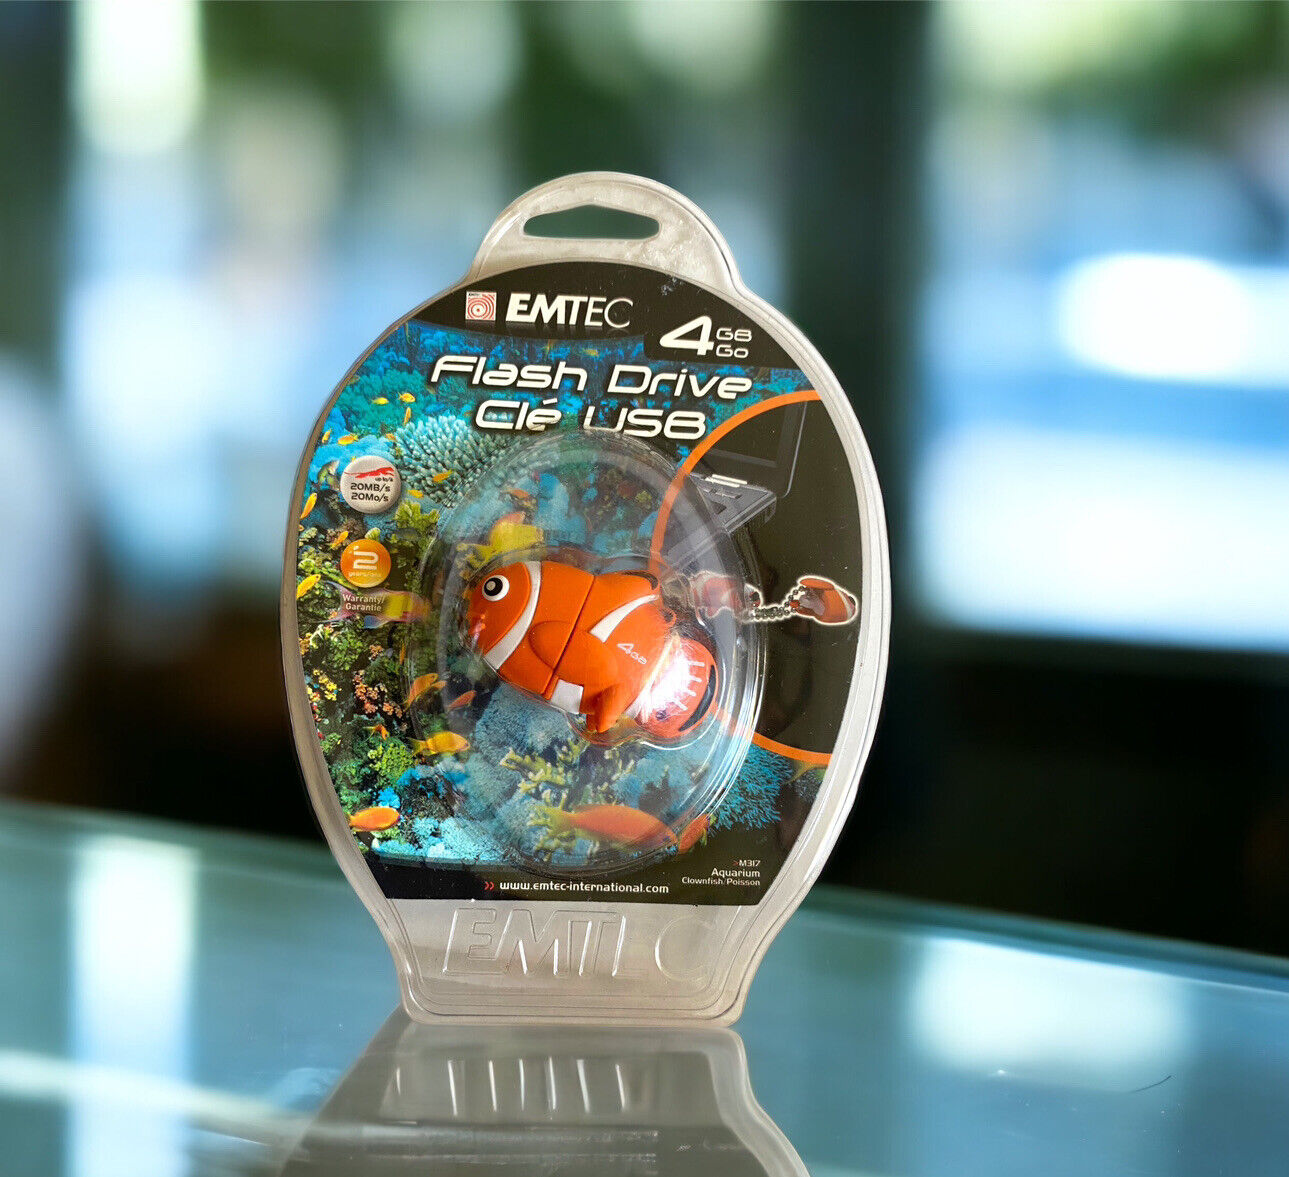 EMTEC Clownfish 4 GB USB Flash Drive factory sealed